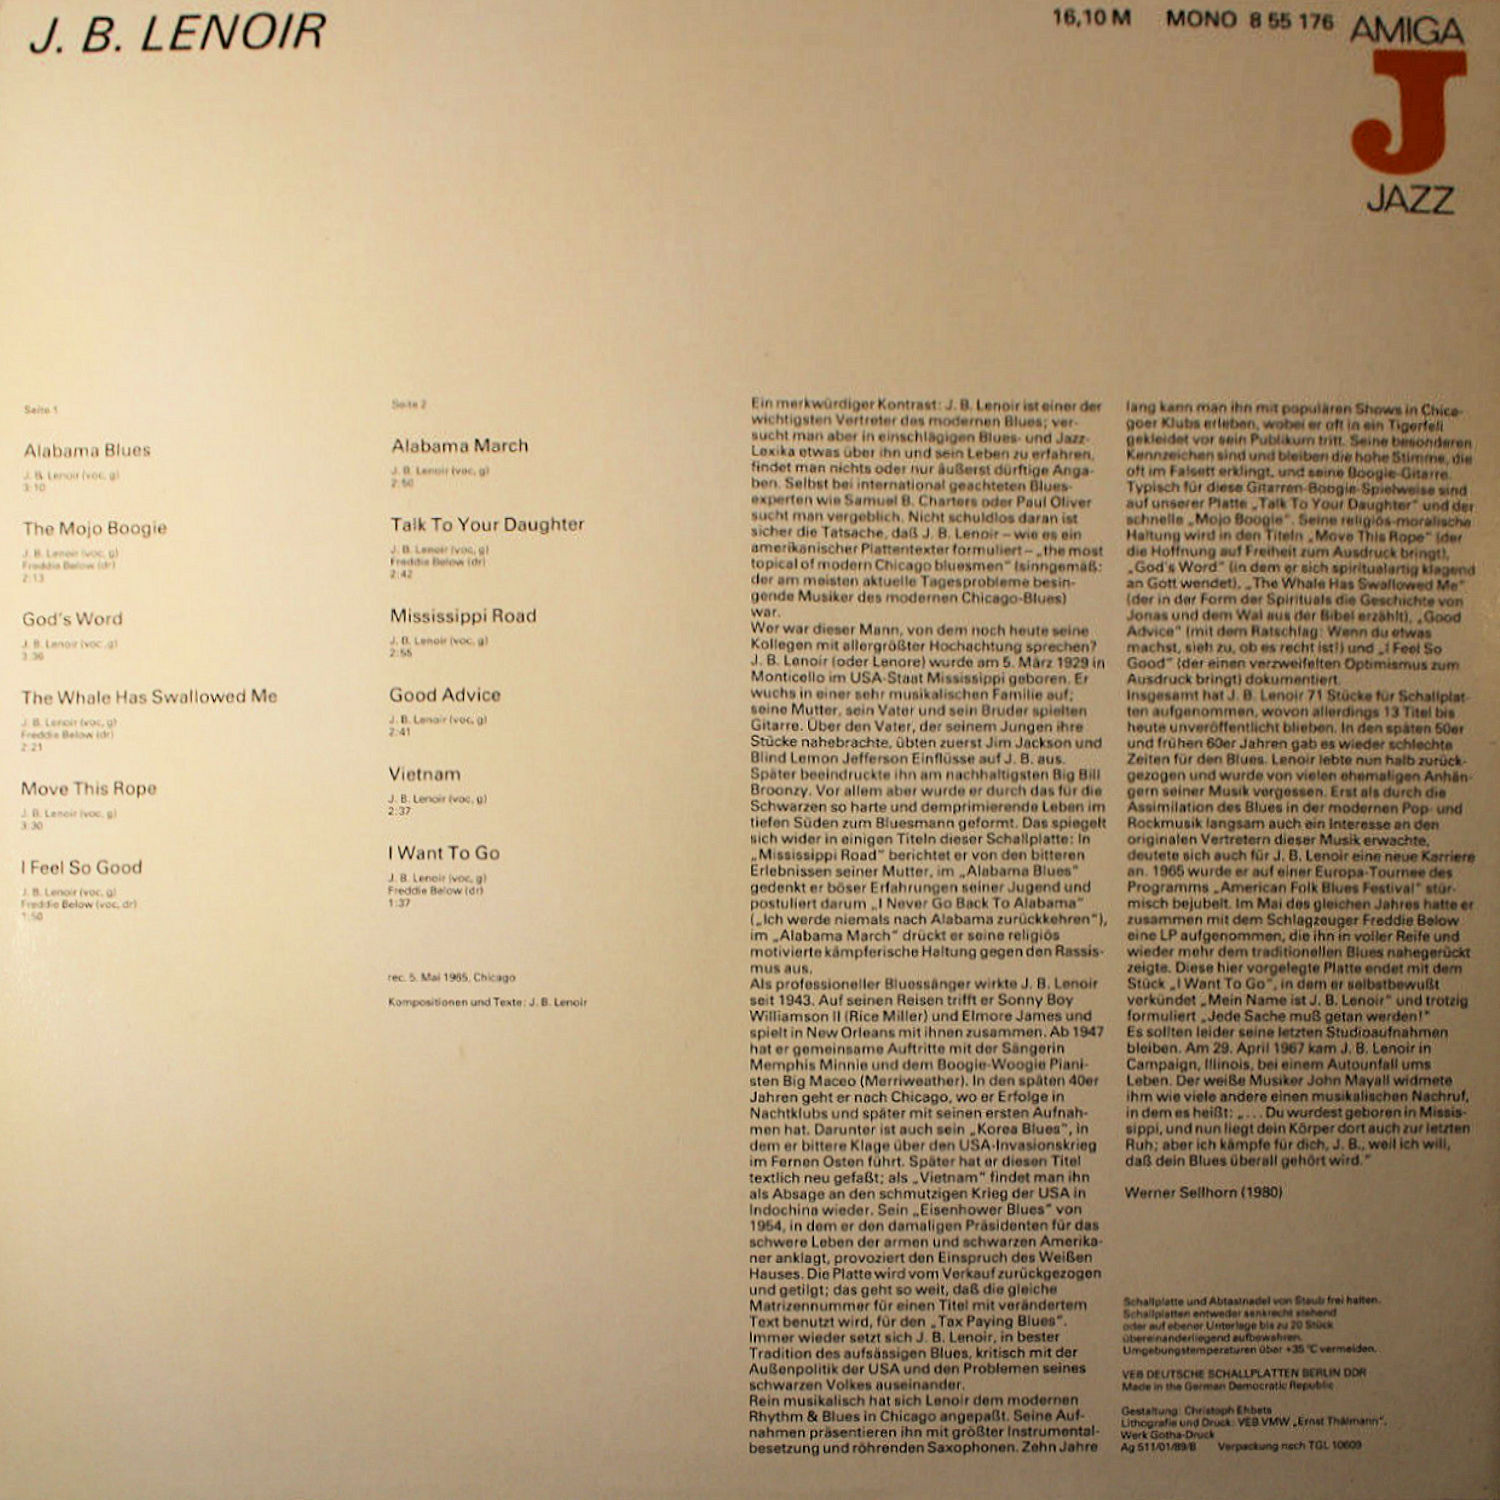 Illustrated J.B. Lenoir discography